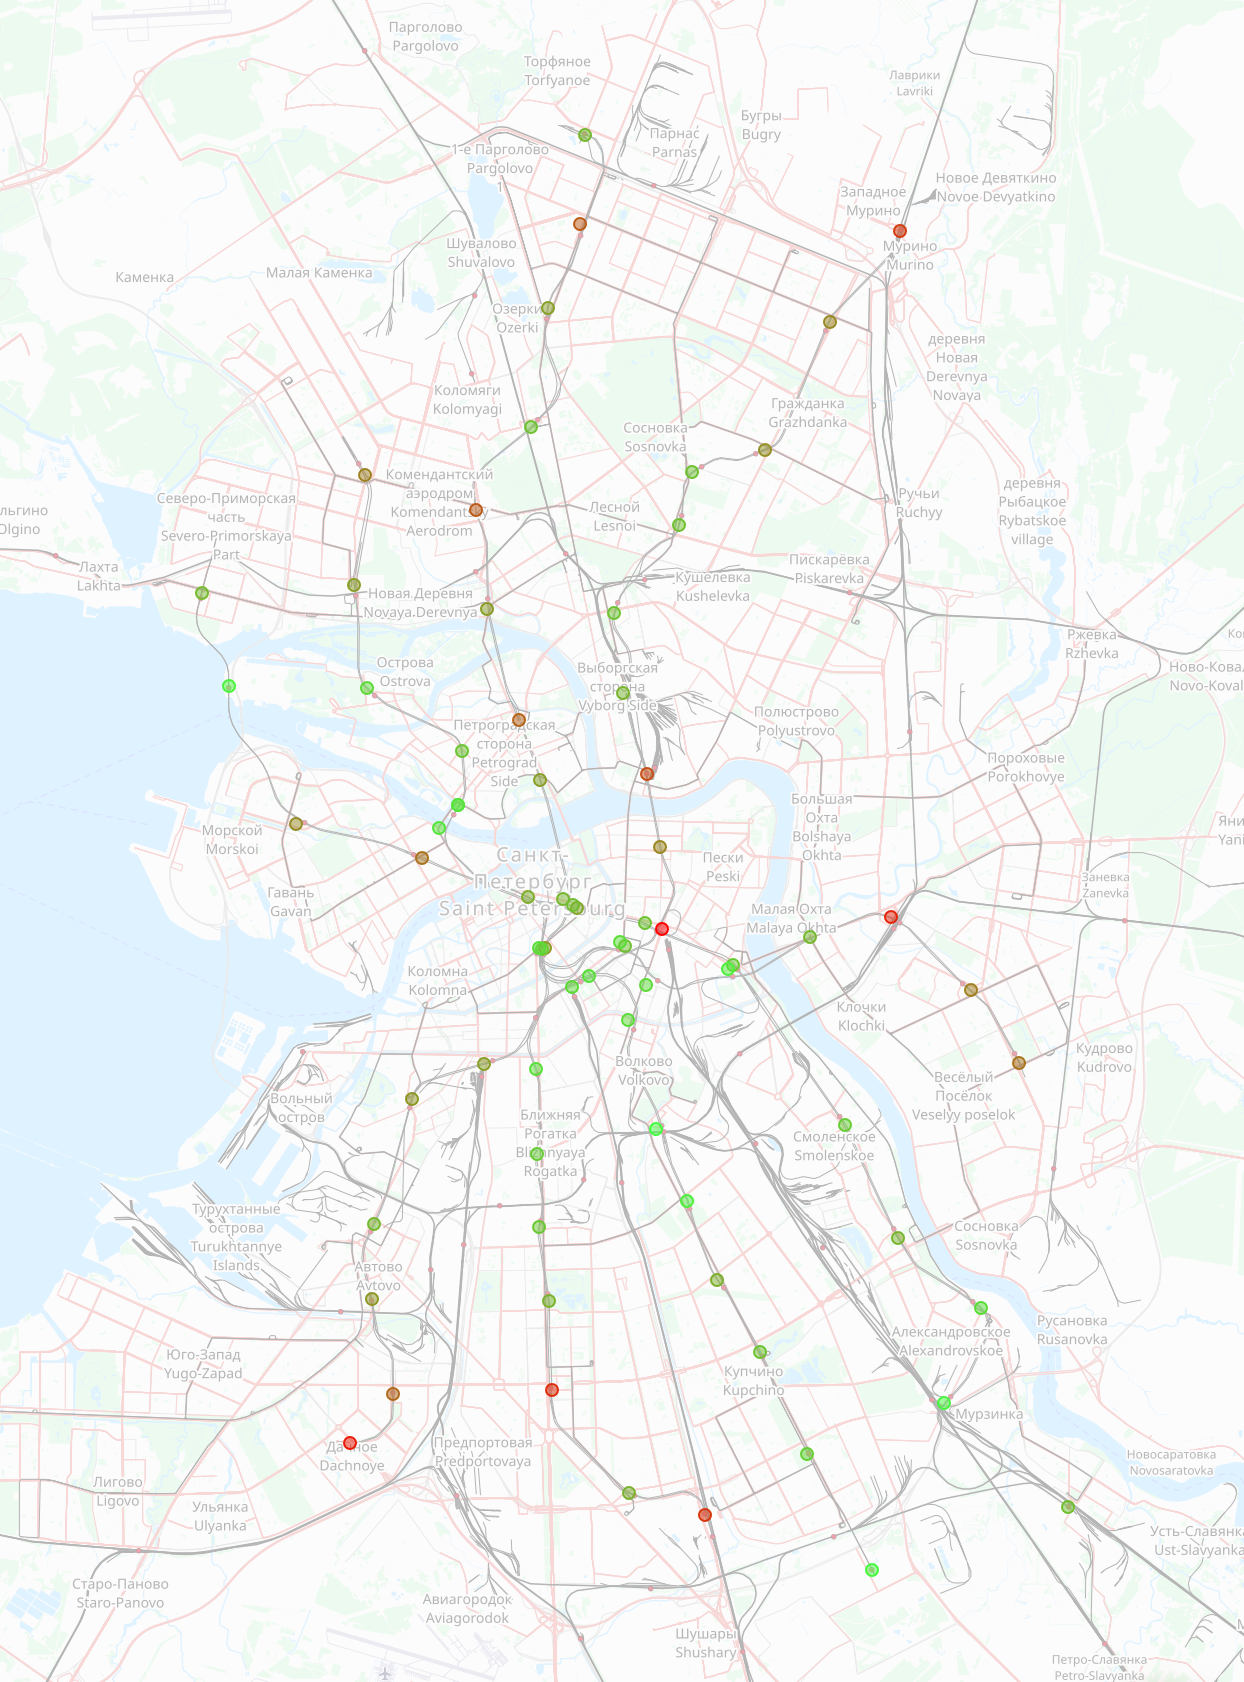 Station traffic map